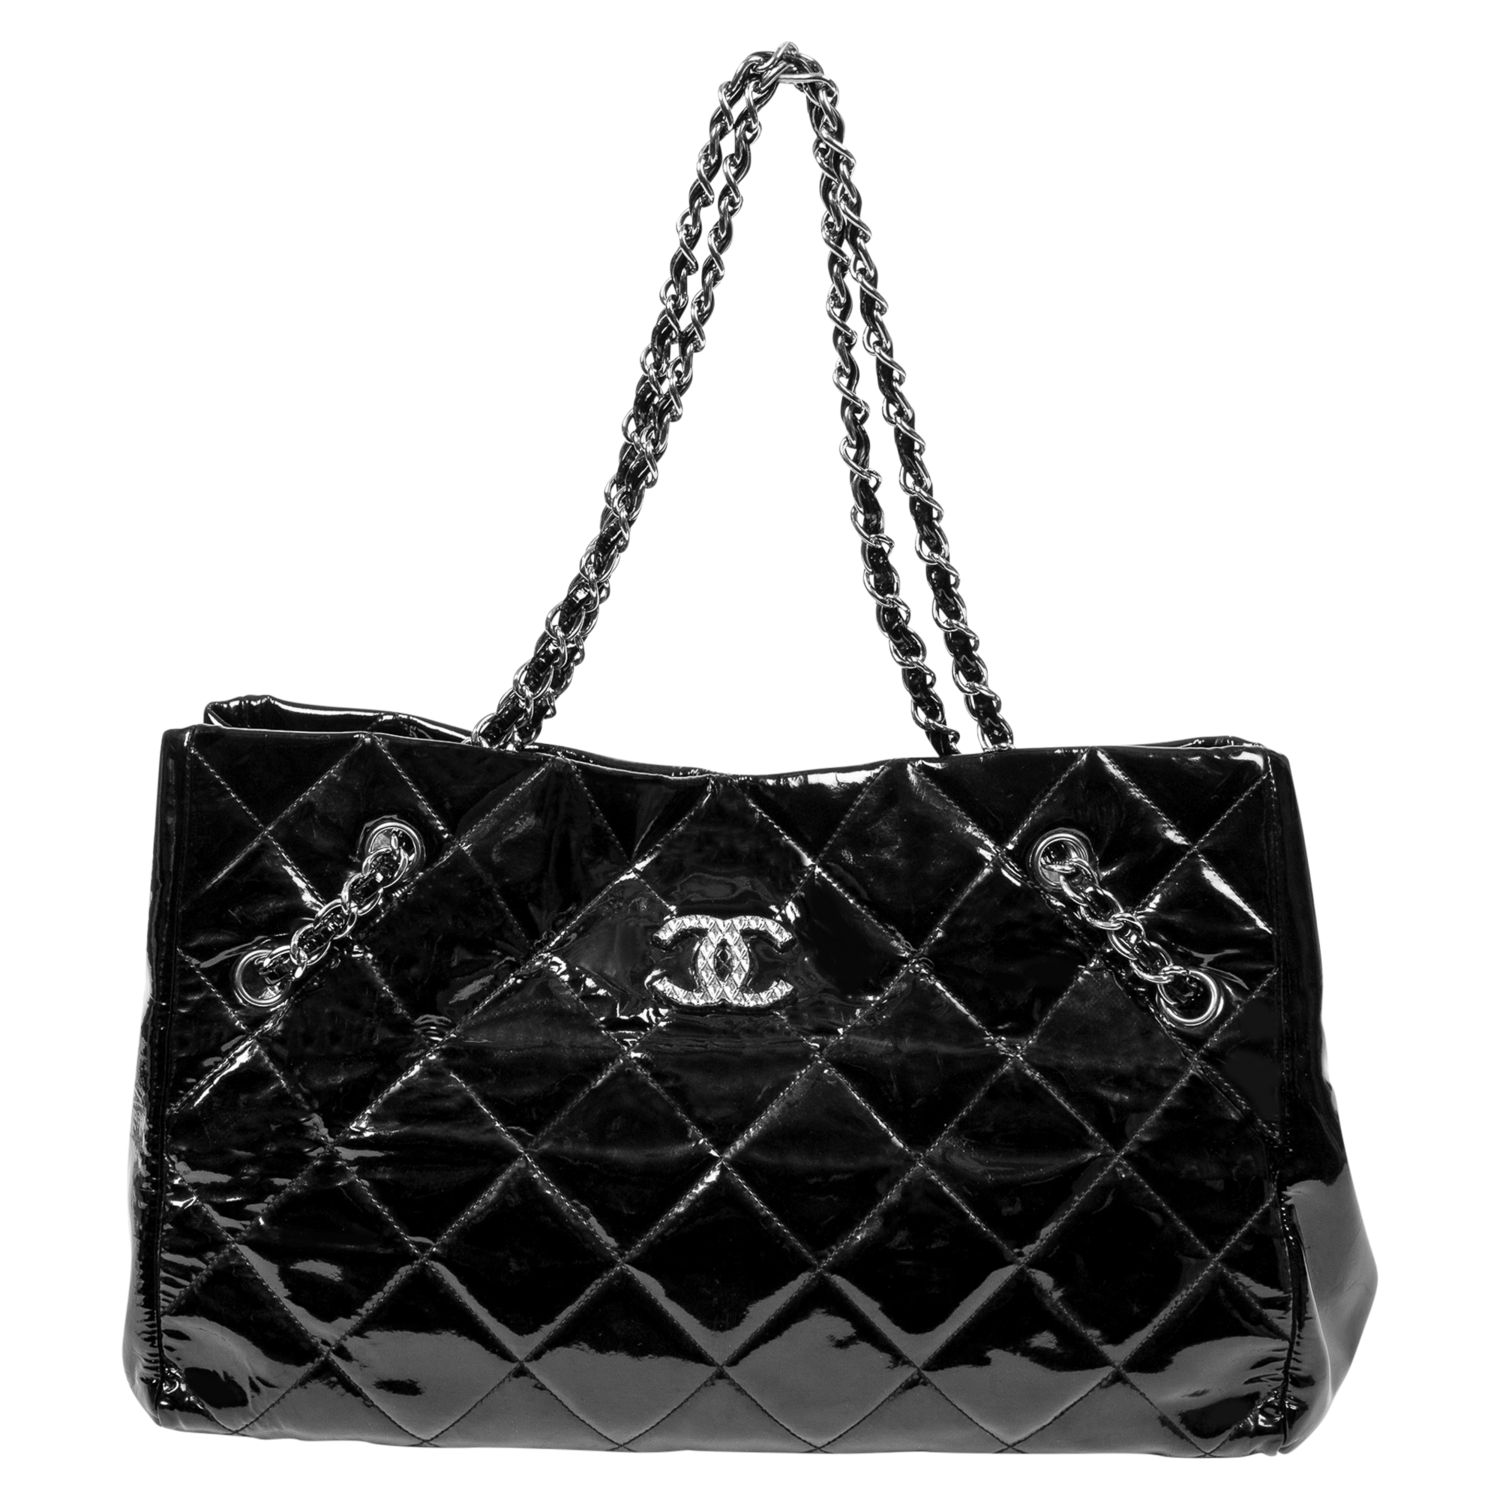 Chanel Black Horizontal Soft CC Chain Tote